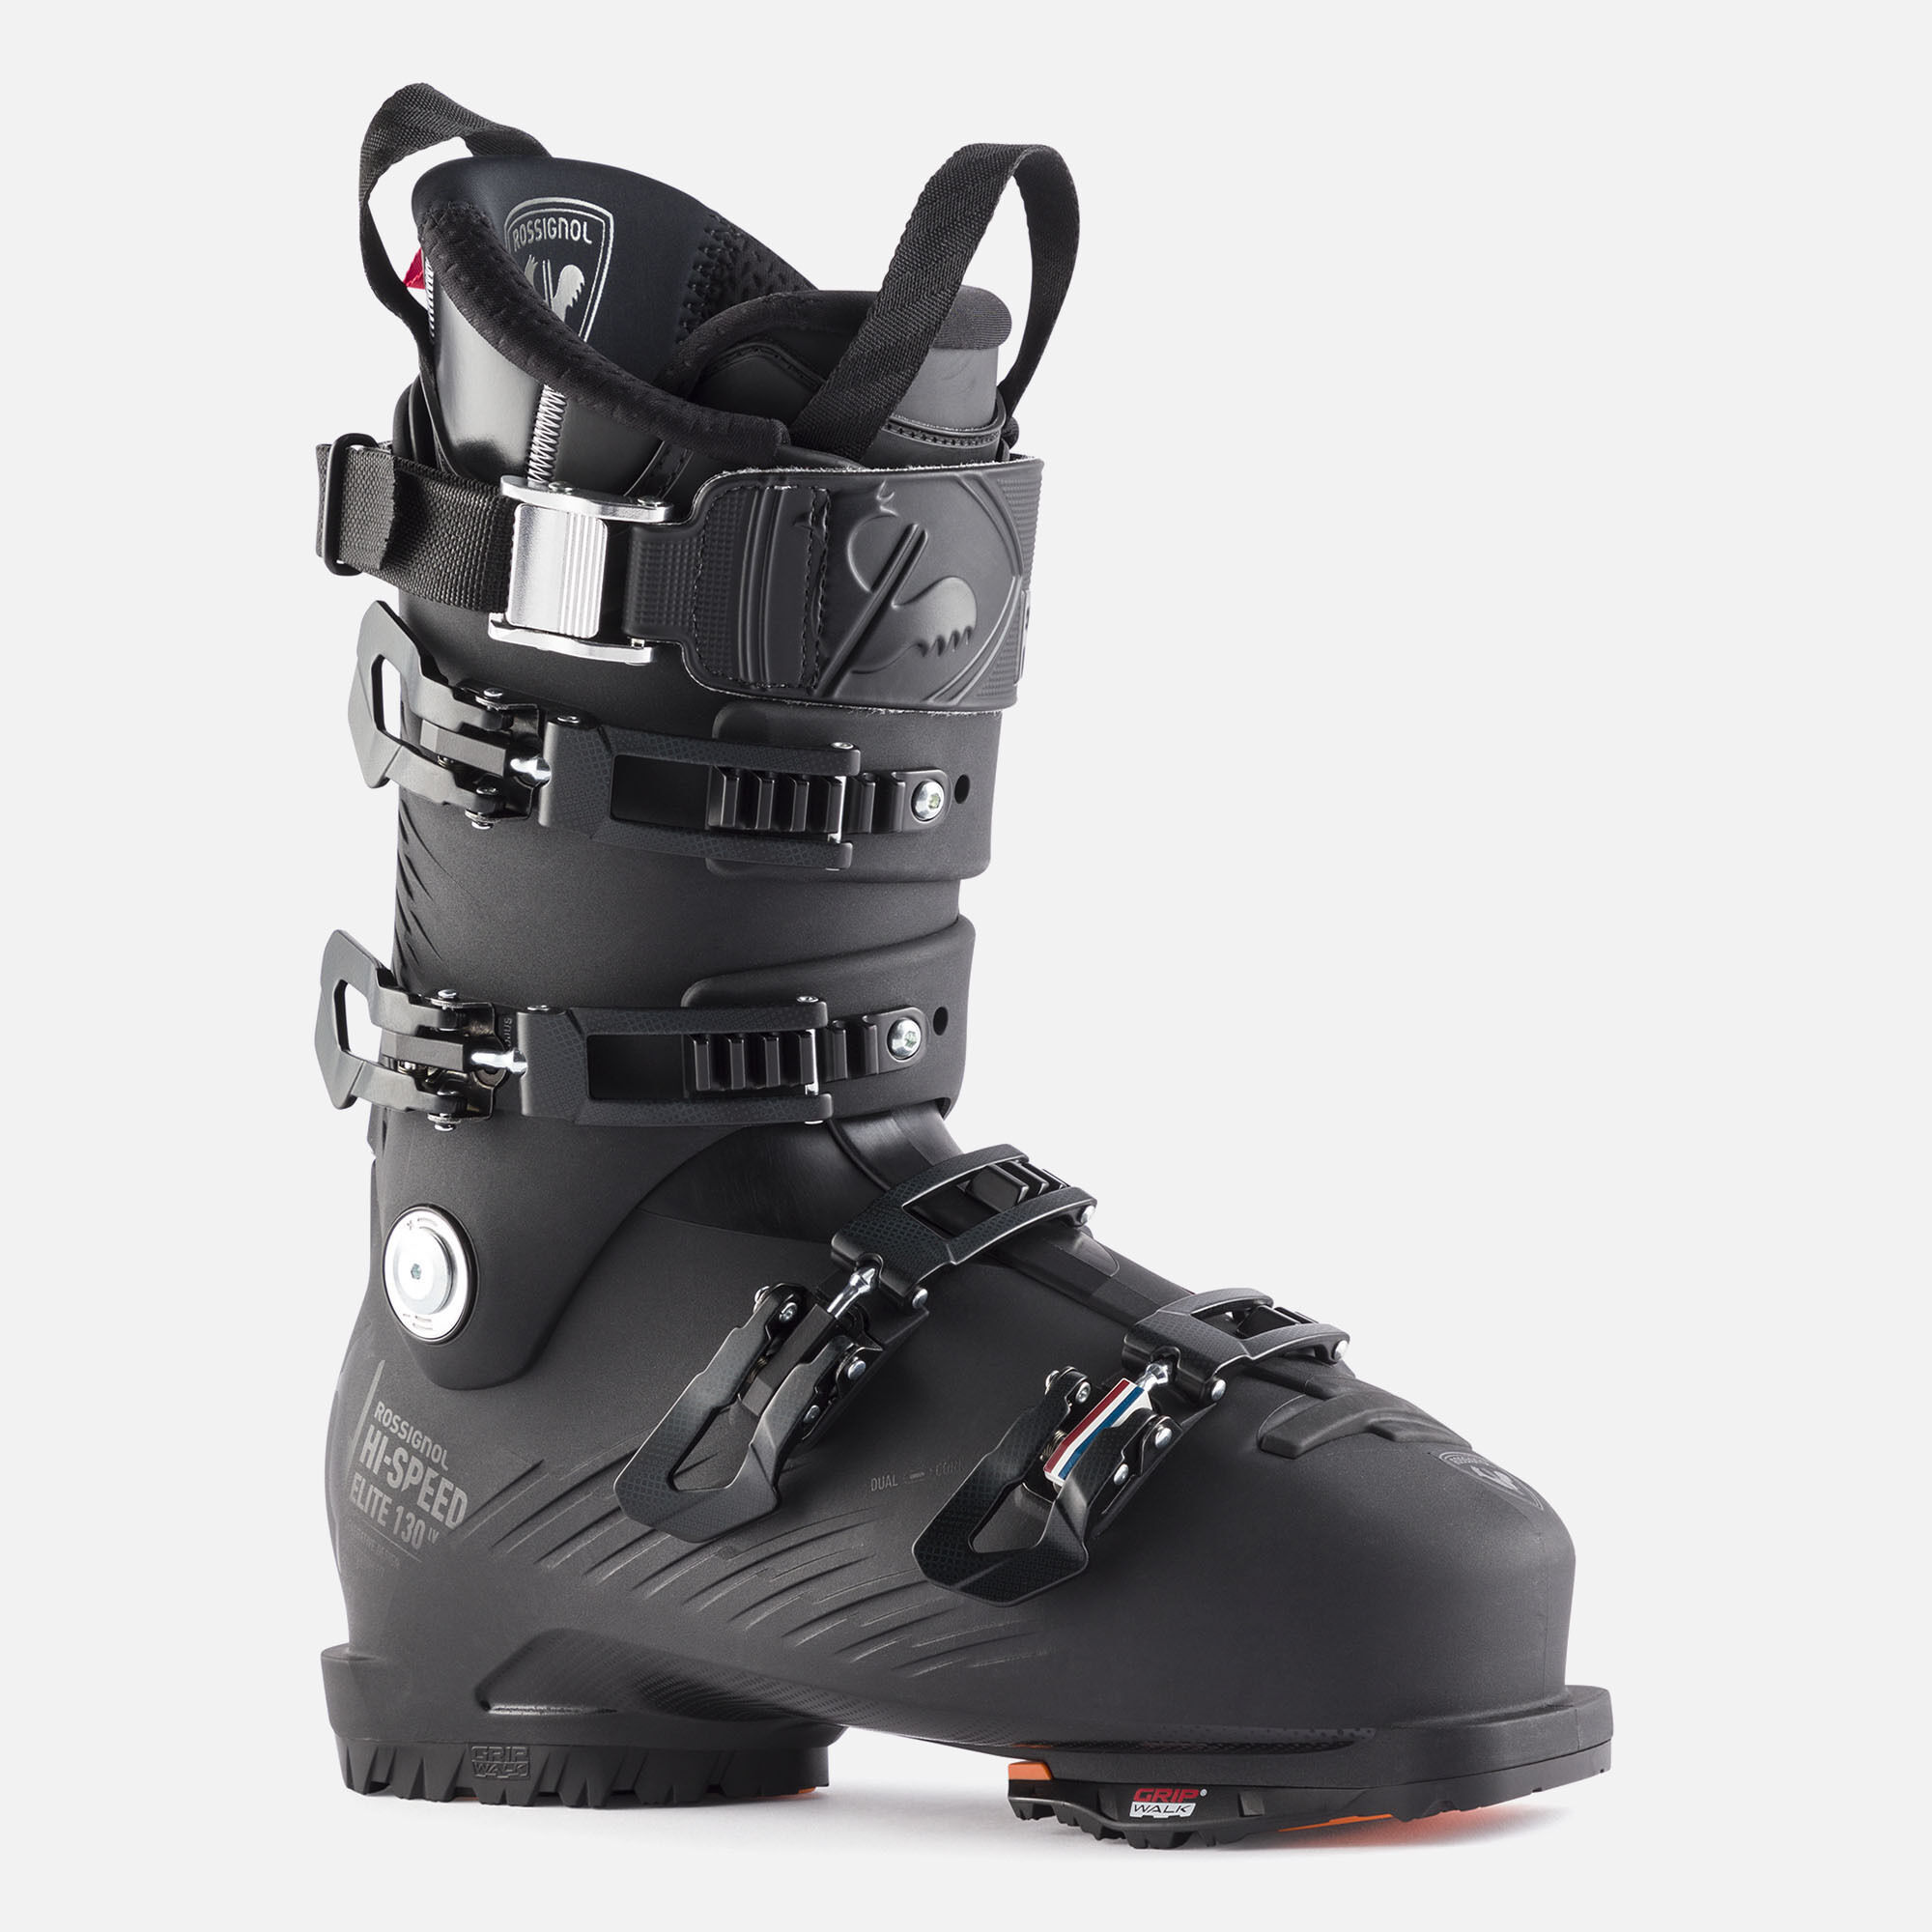 Ski boots, accessories, gripwalk soles | Rossignol